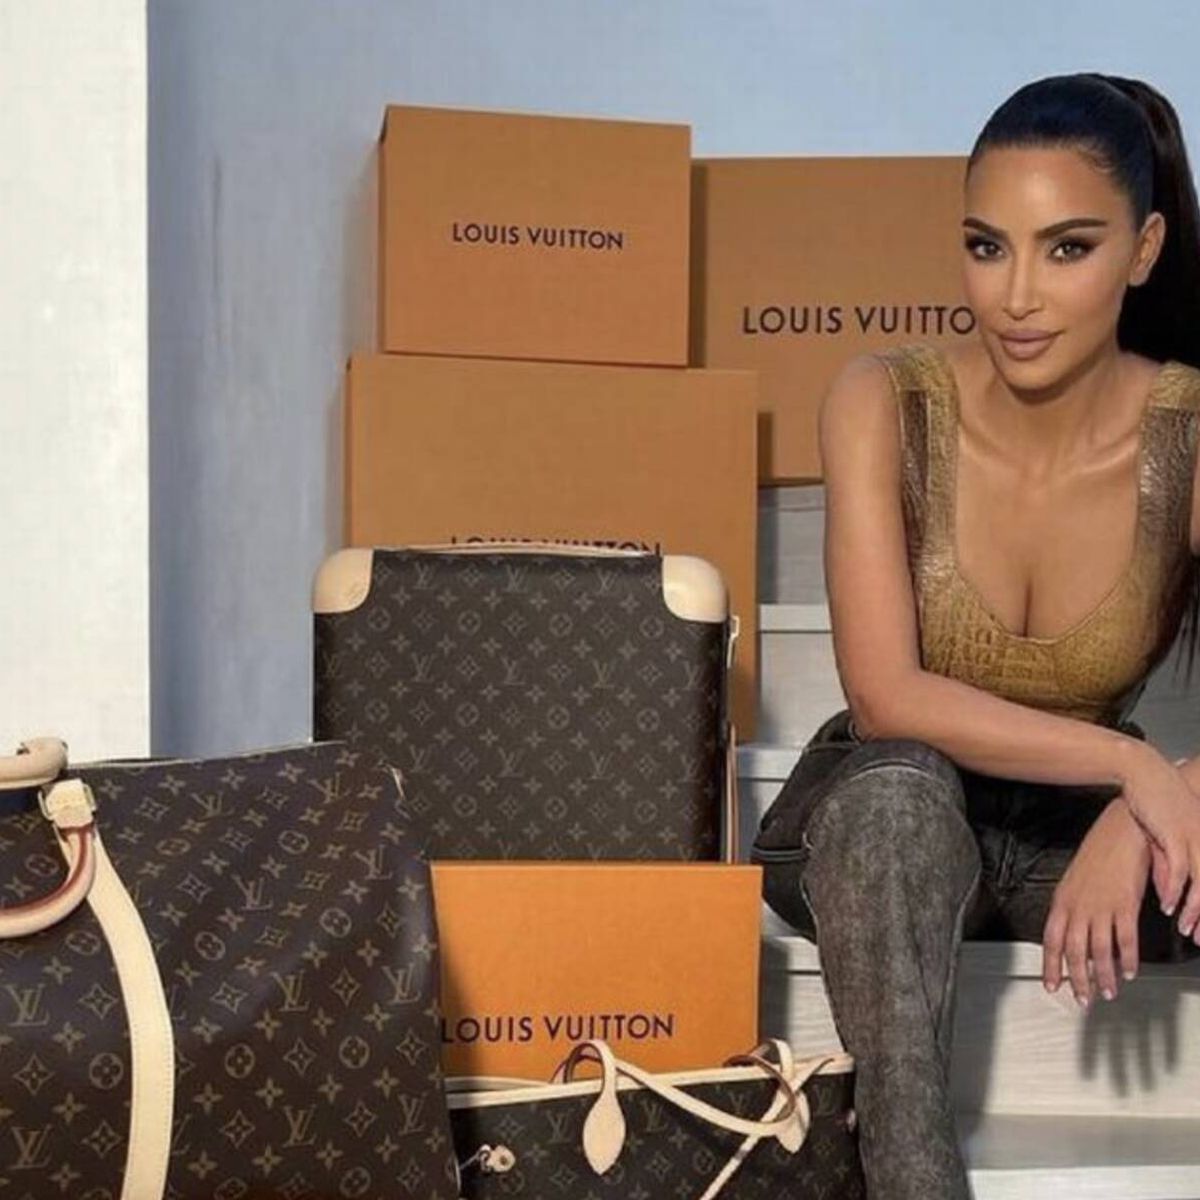 Empresa rifa bolsas Louis Vuitton en la posada y se vuelve viral